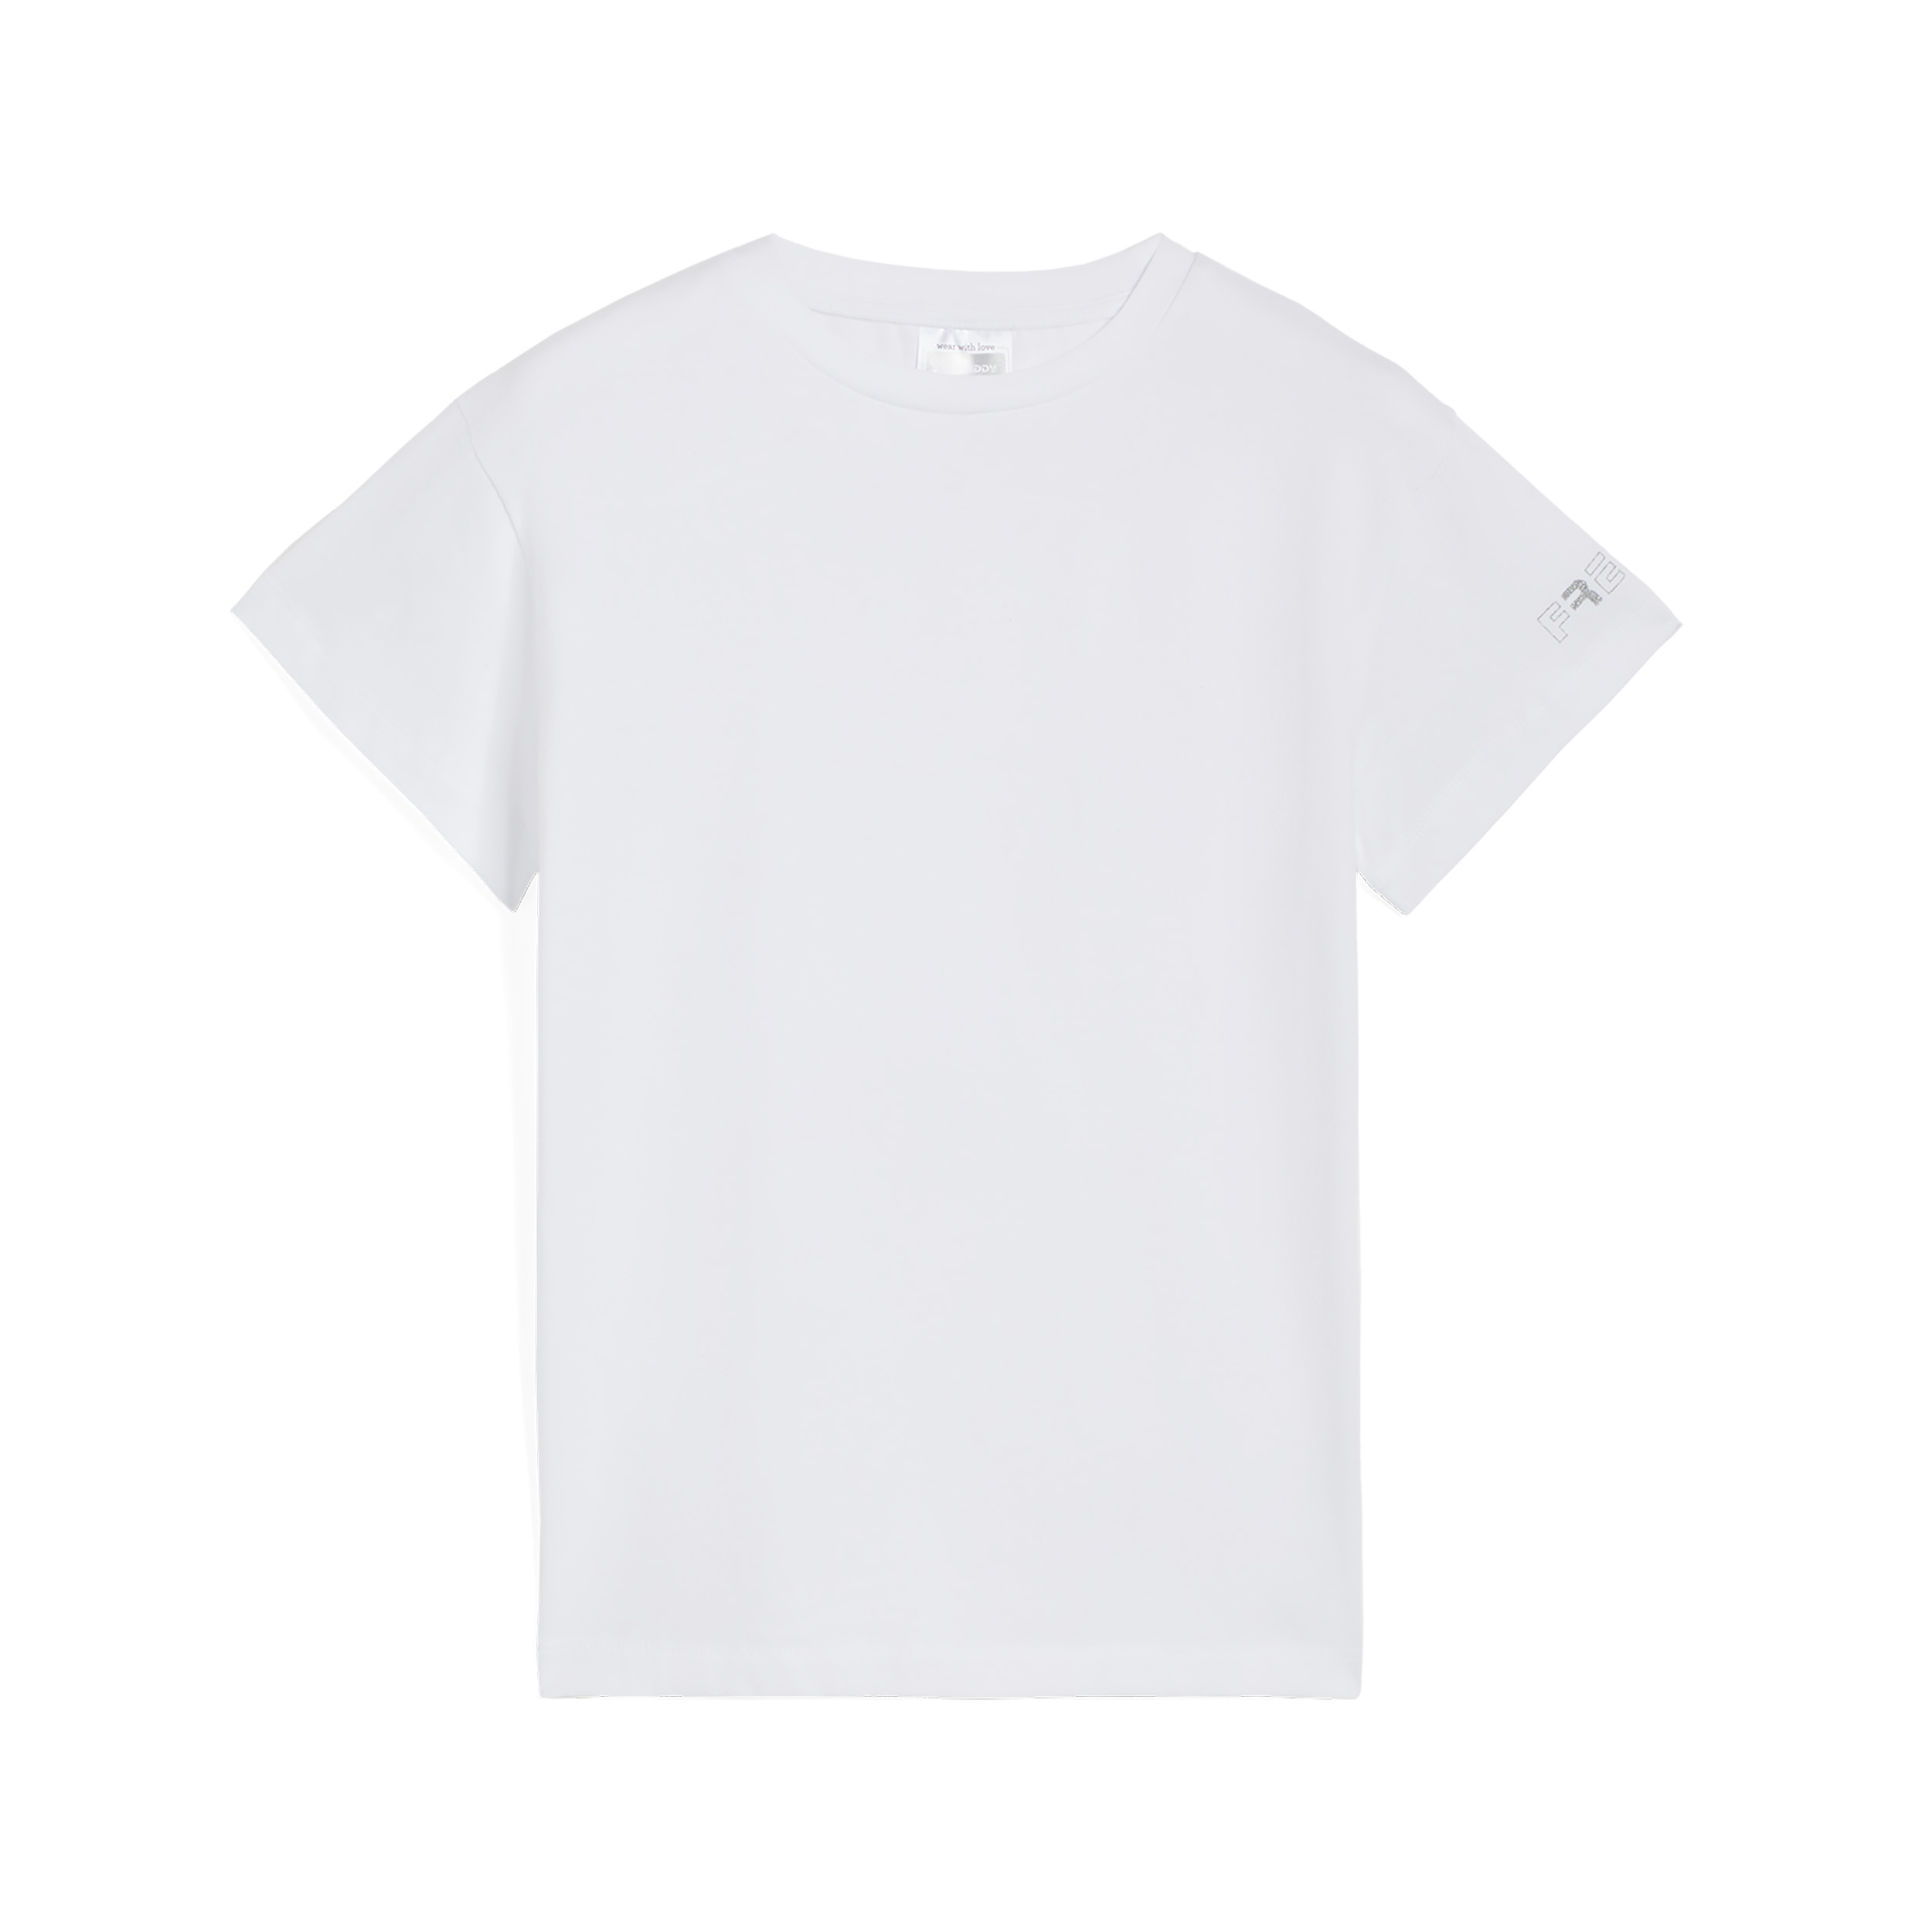 Freddy T-shirt da bambina regular fit con logo sulla manica Bianco Junior 4 Anni